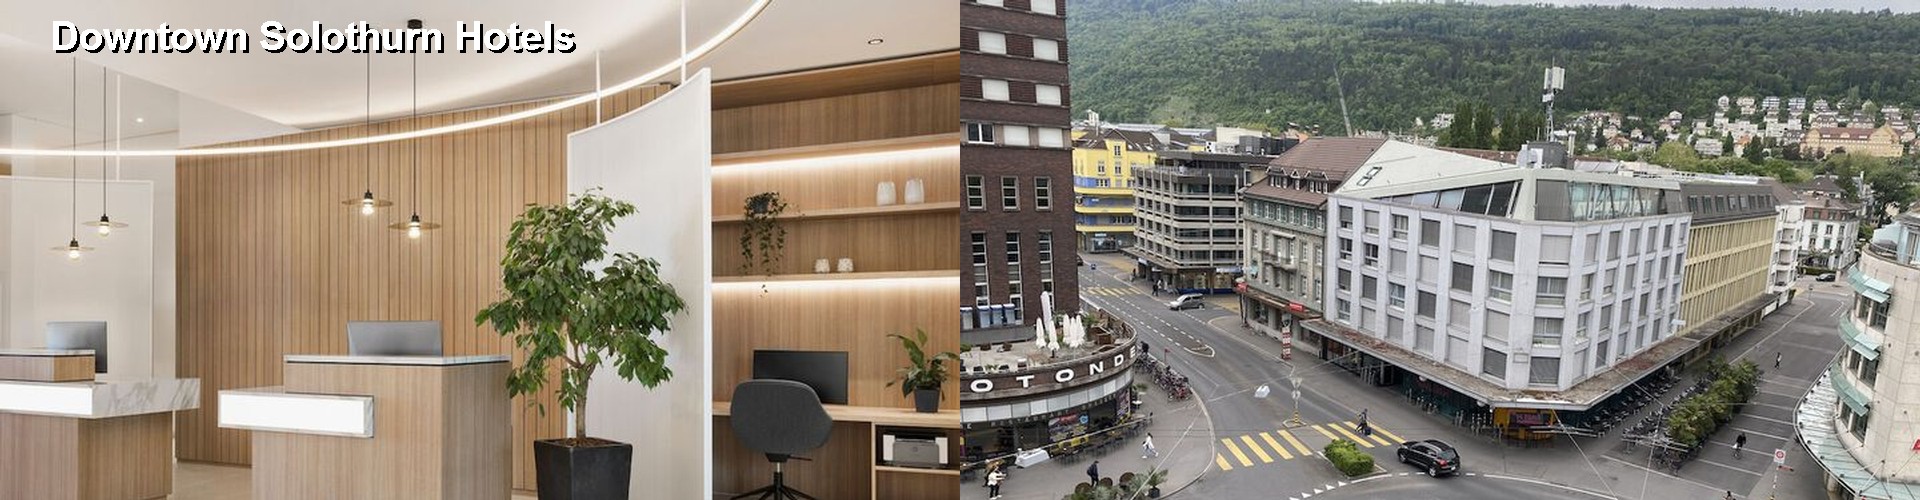 3 Best Hotels near Downtown Solothurn